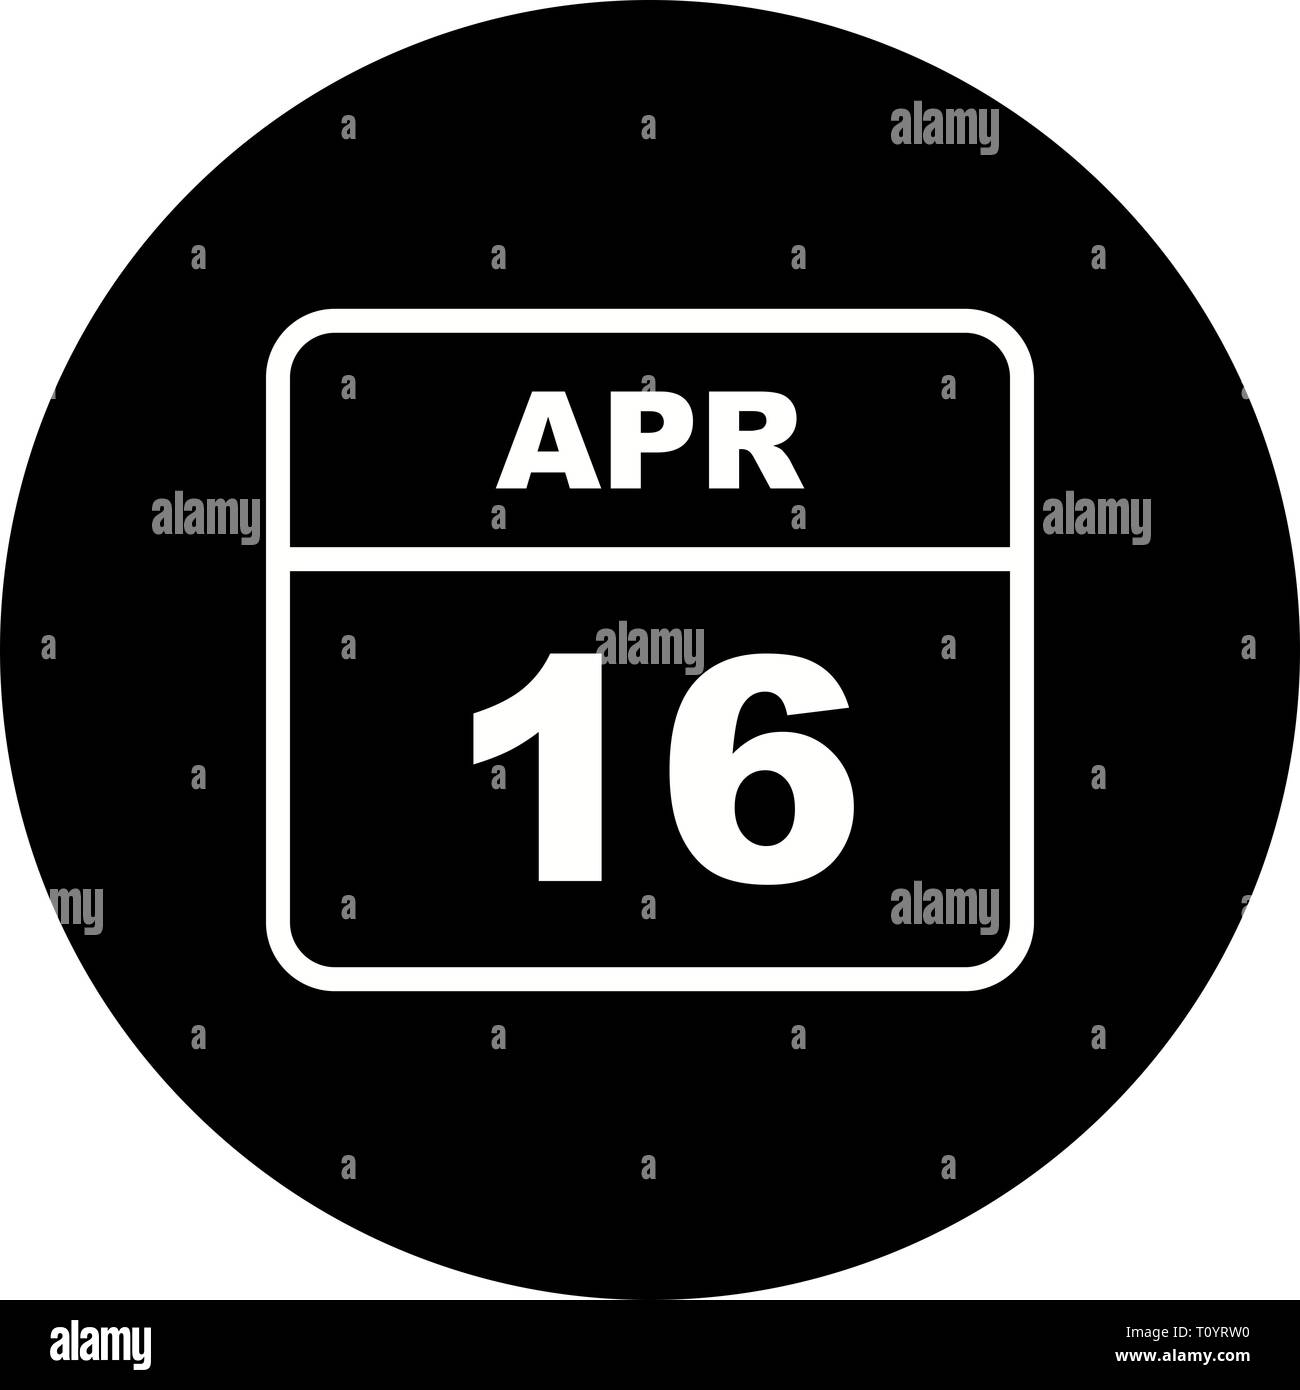 April 16th Date on a Single Day Calendar Stock Photo Alamy